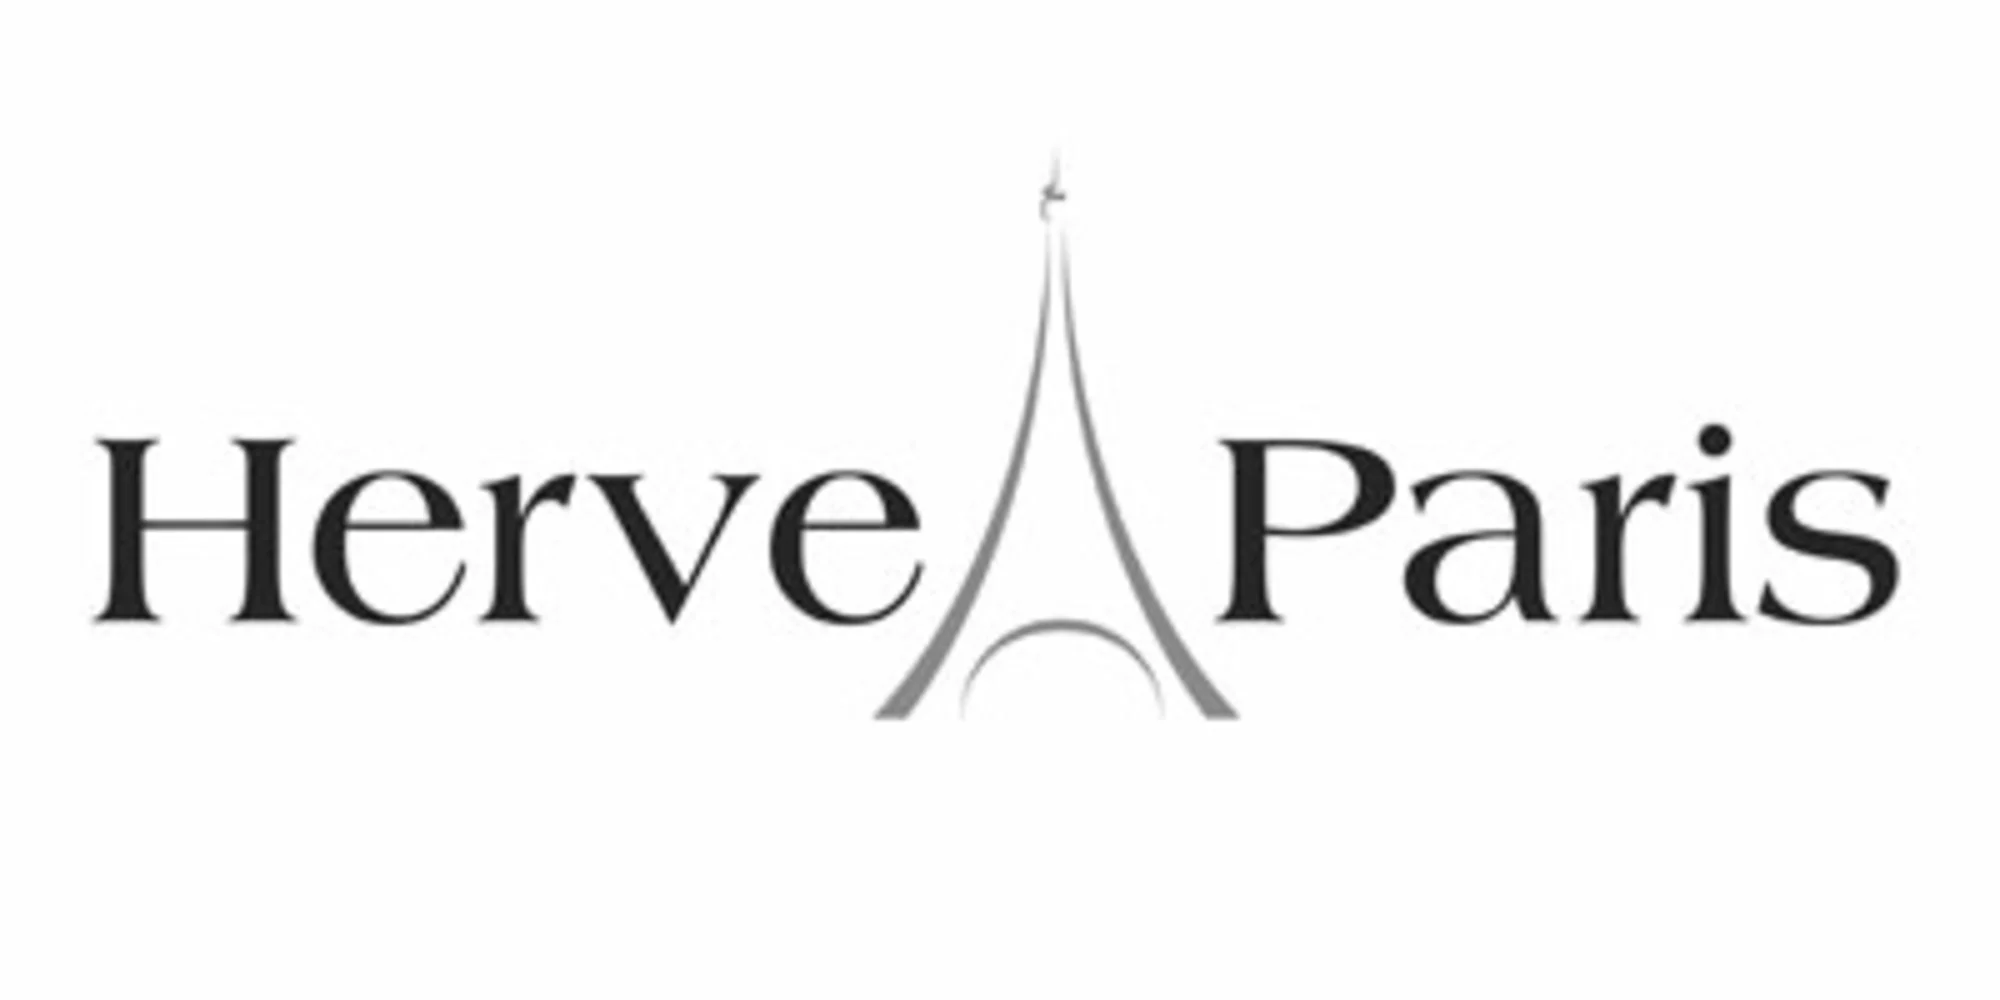 Logo Herve Paris